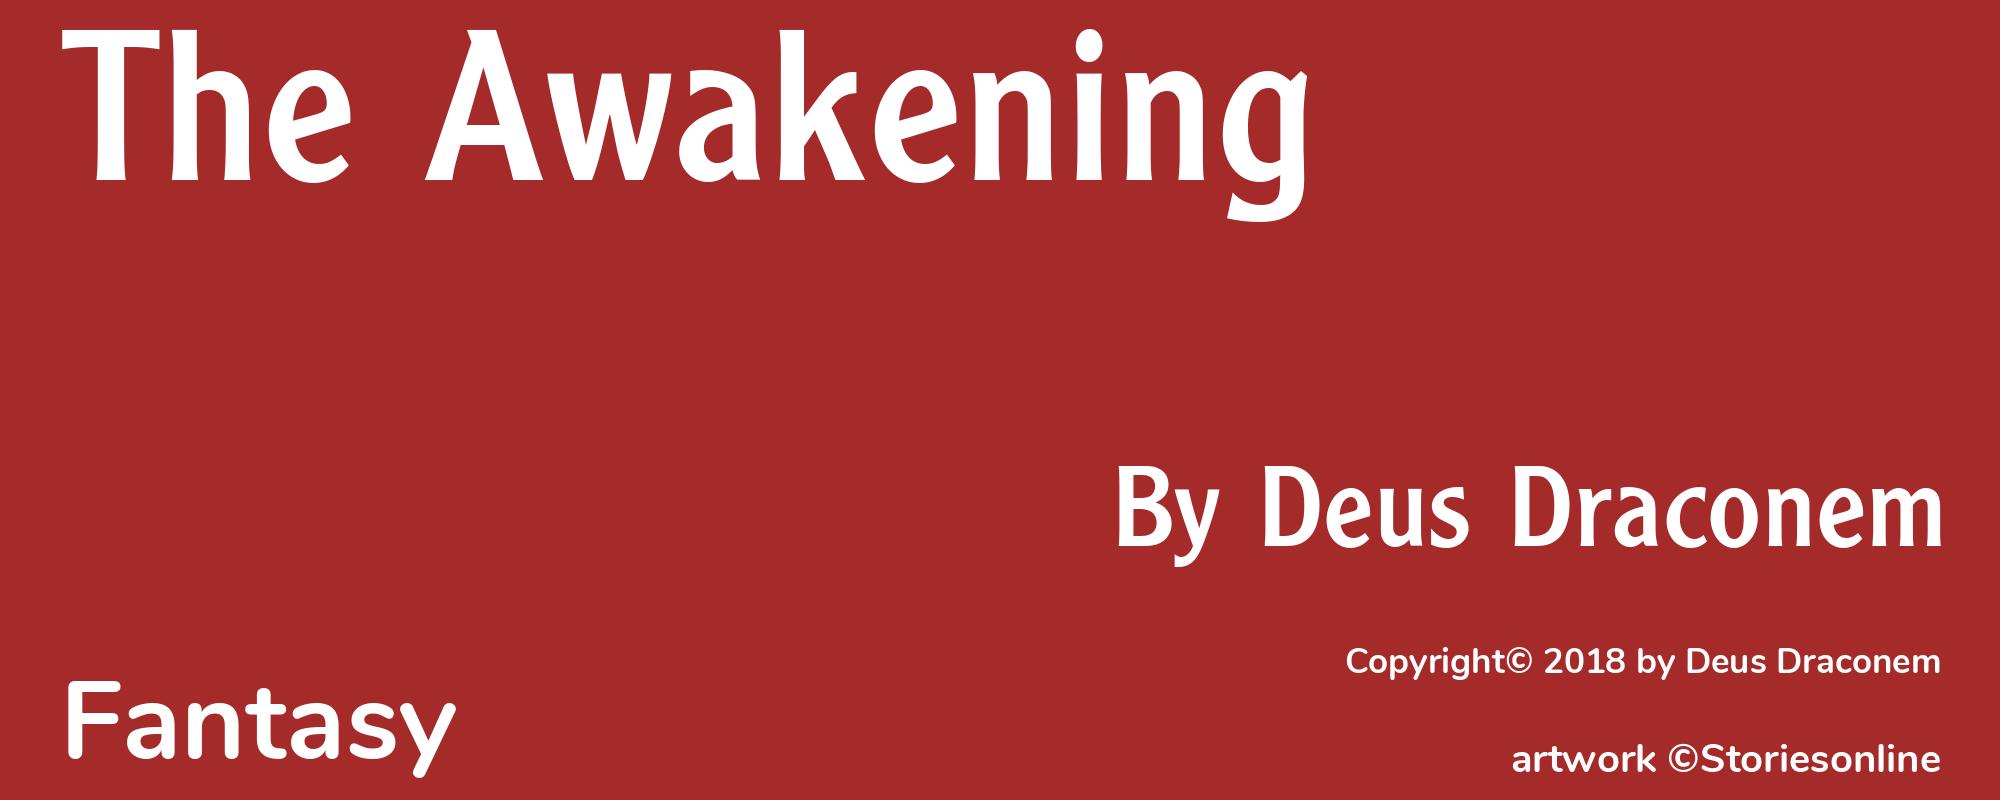 The Awakening - Cover